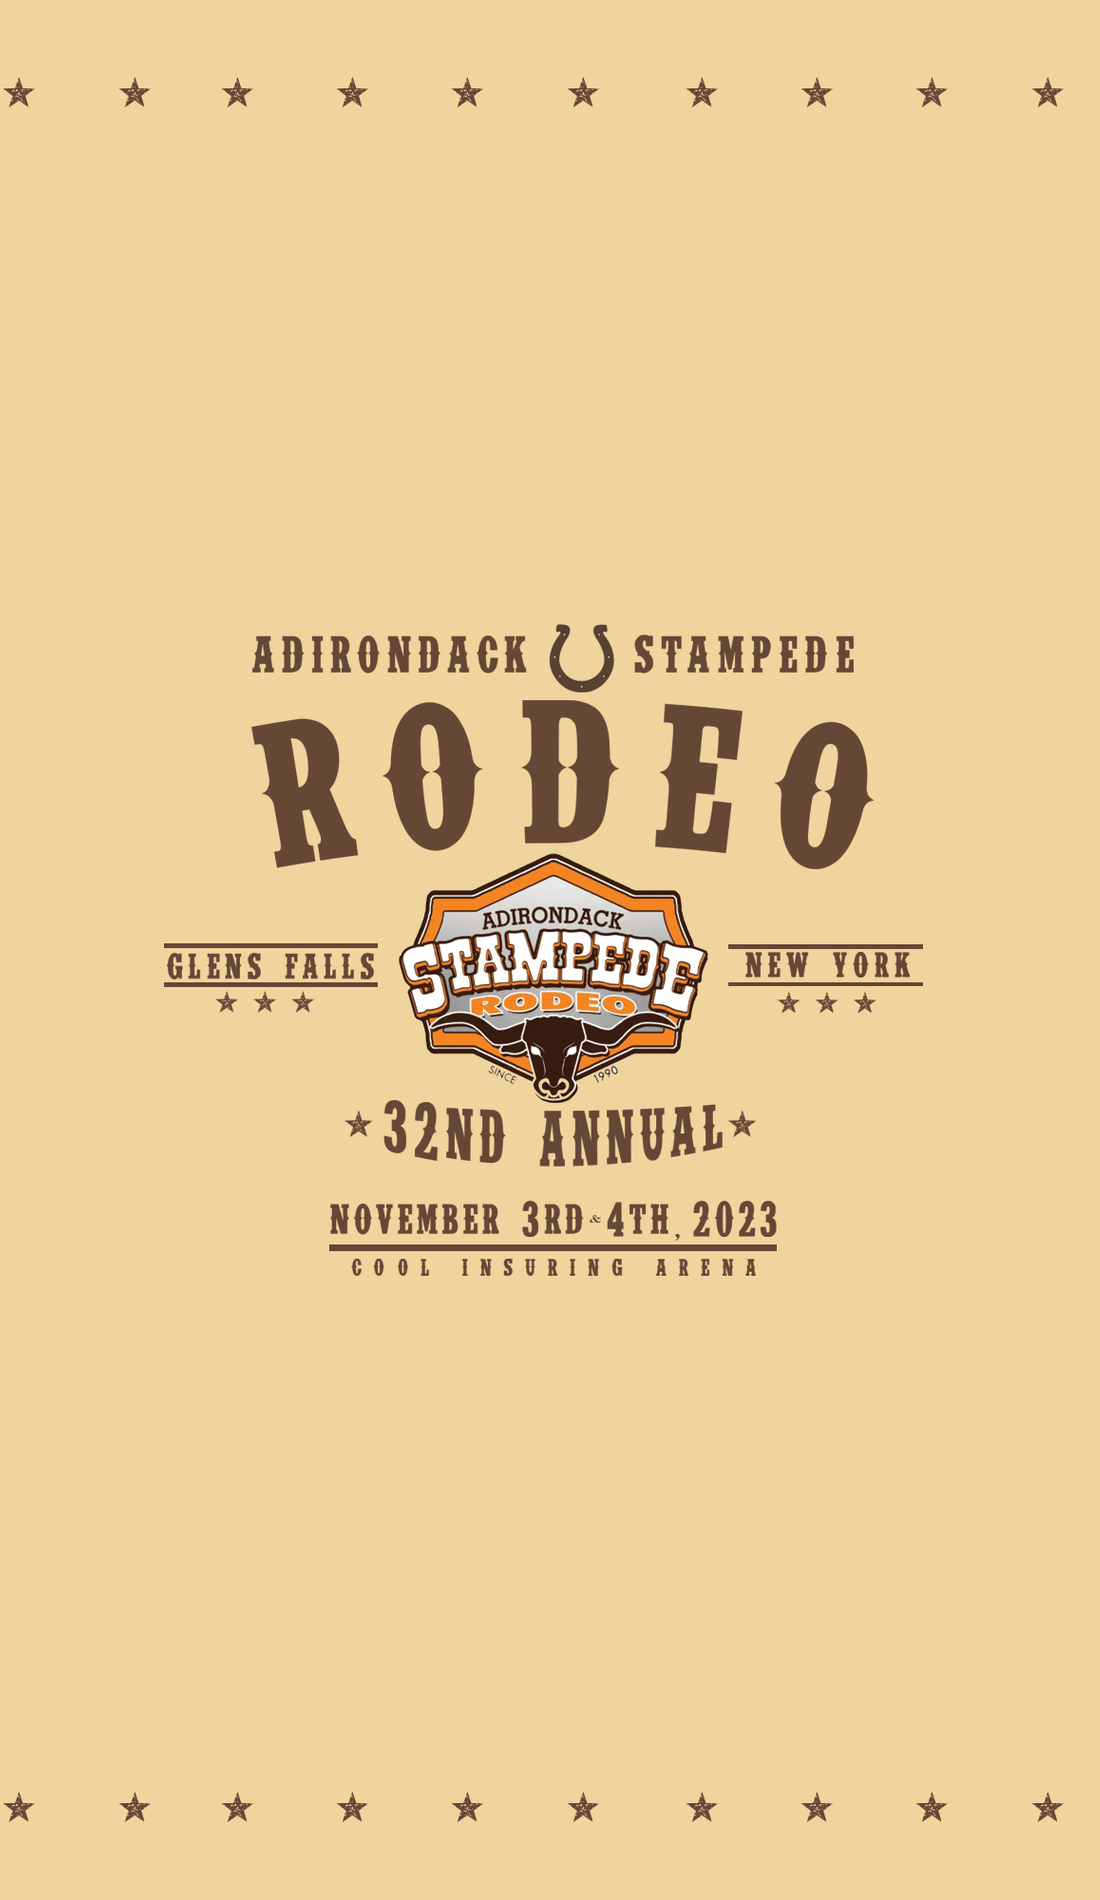 A Adirondack Stampede Rodeo live event